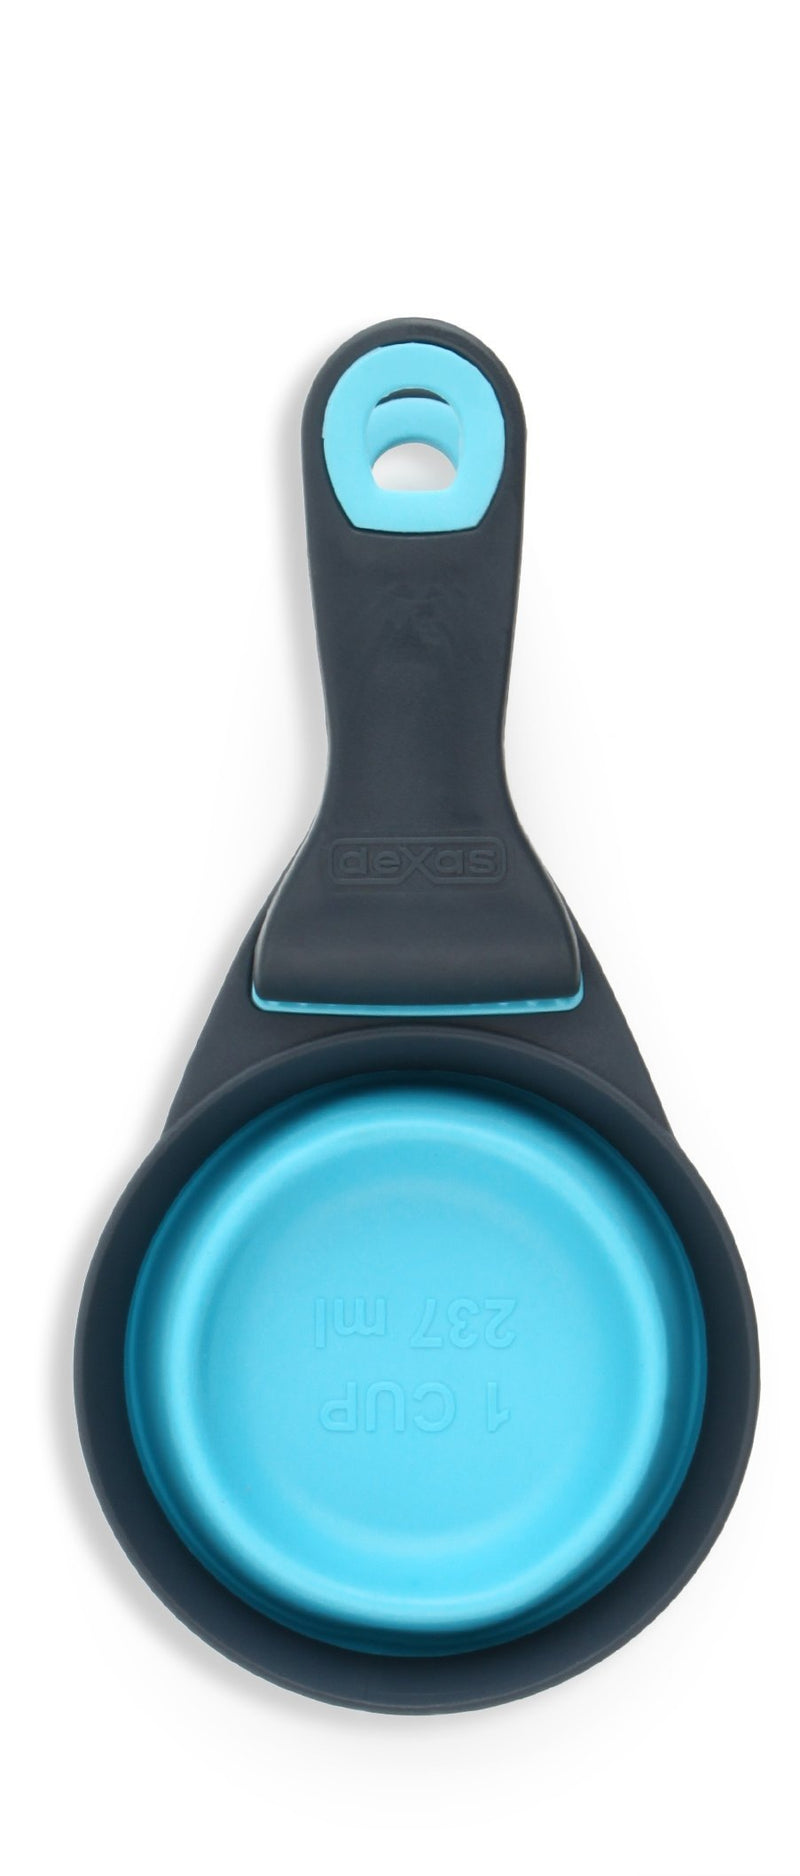 [Australia] - Dexas Popware for Pets Collapsible KlipScoop 1 Cup Capacity Gray/Blue 